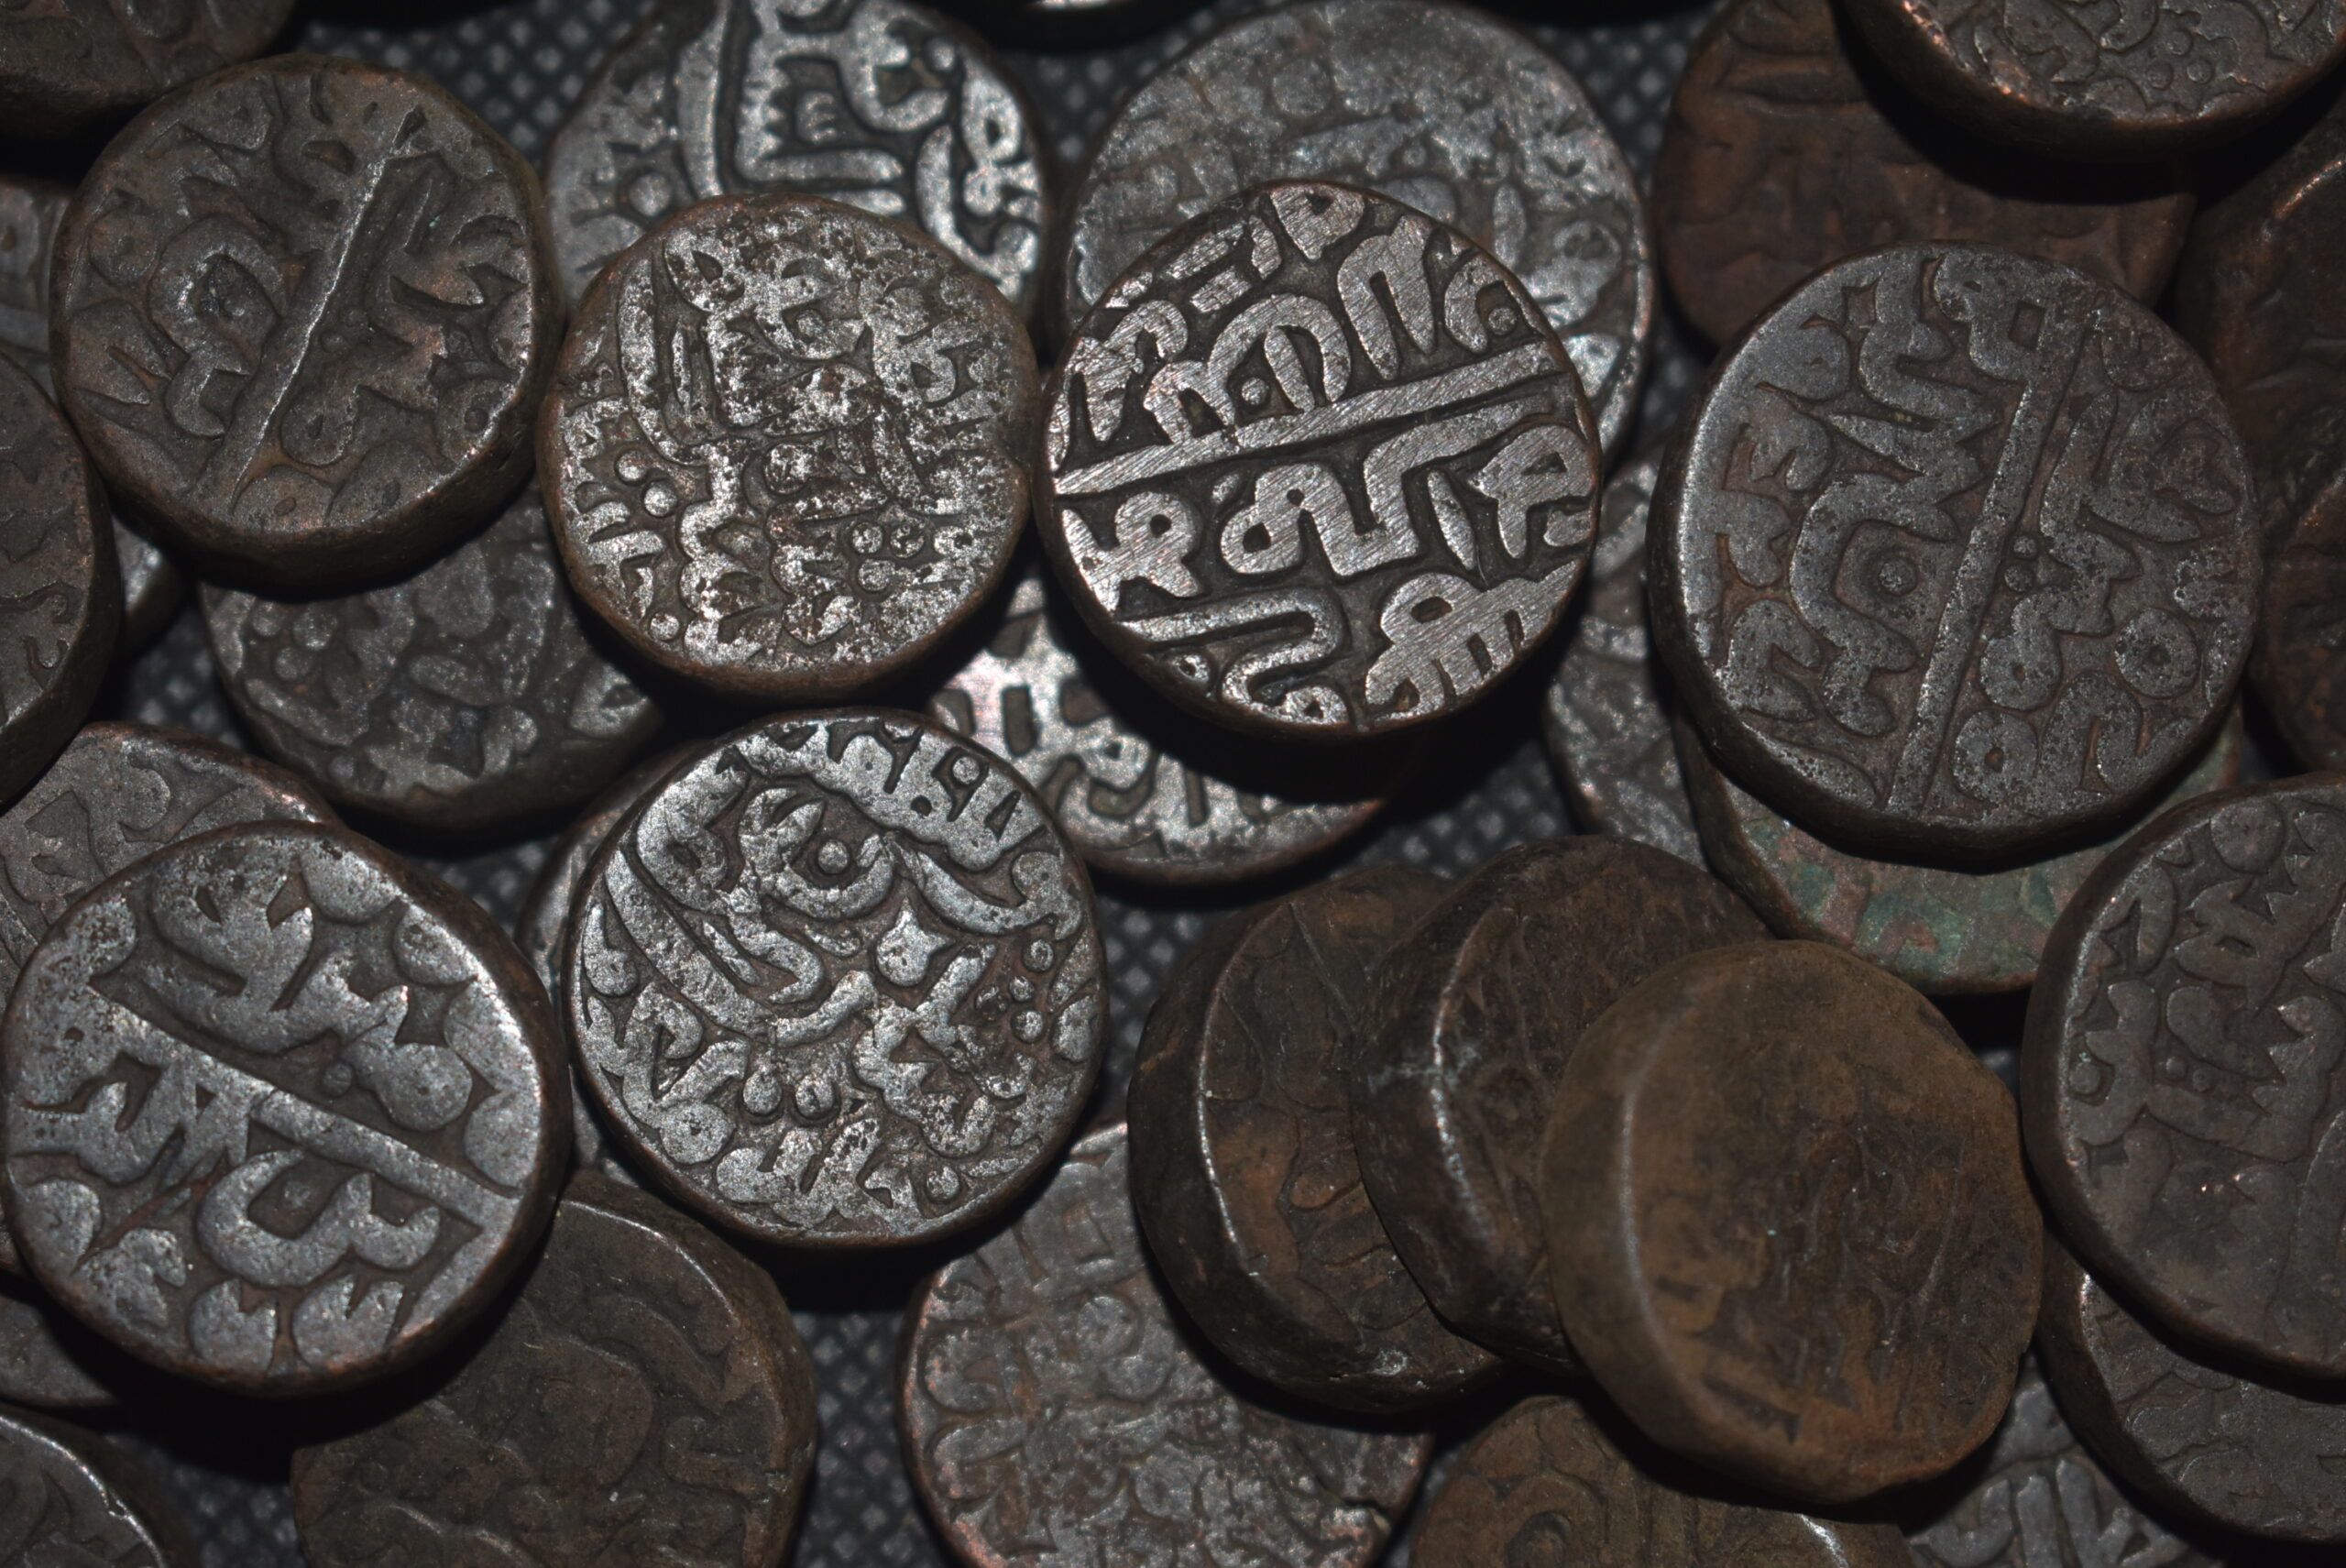 Rare One Paisa Heavy Weight Copper Coin of Sher Shah Suri Delhi